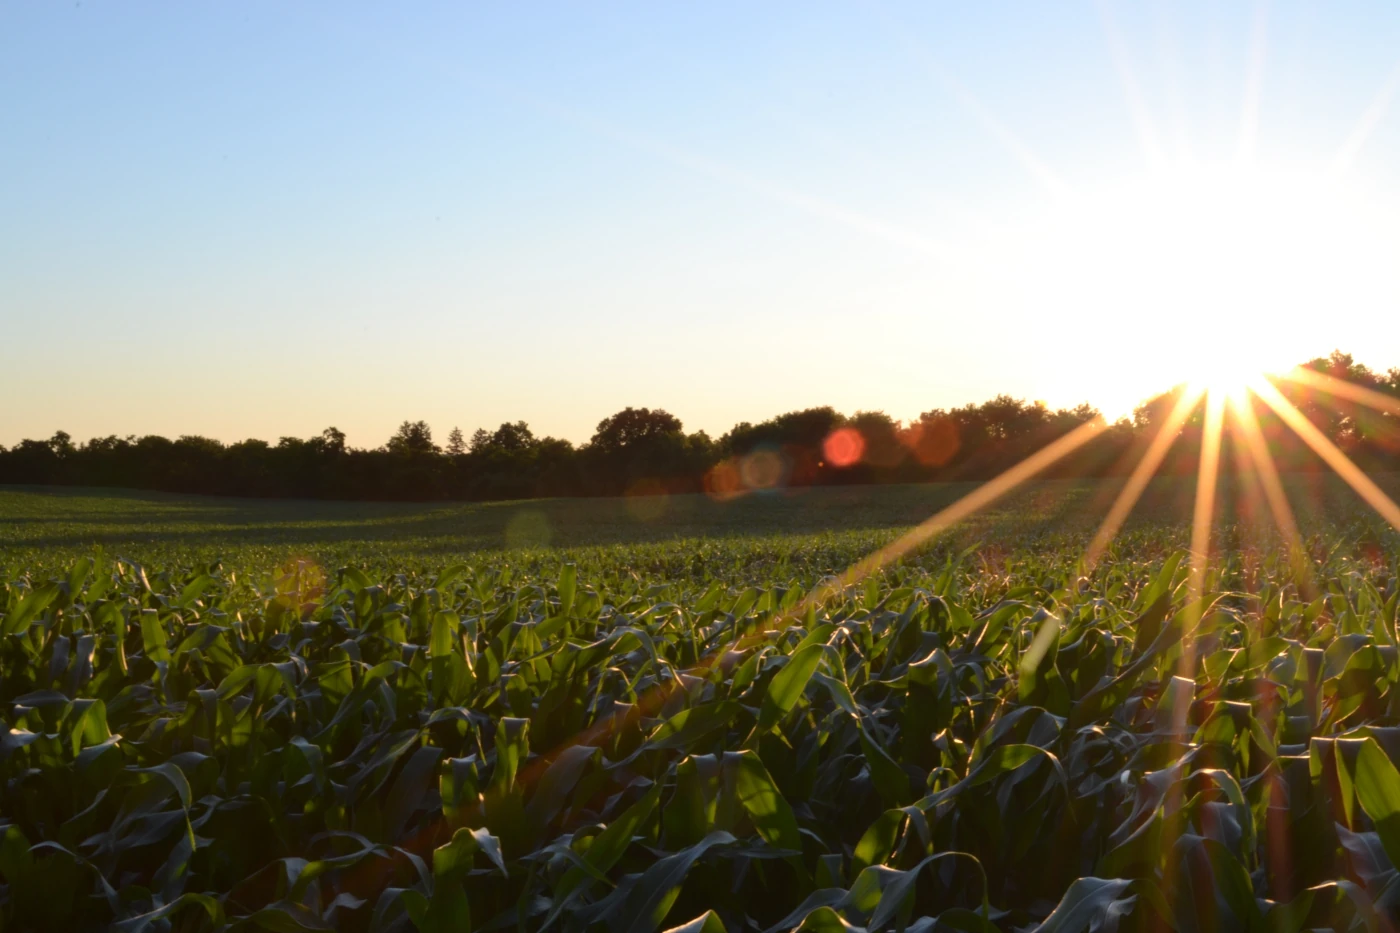 Farmland horizon with the sun shining brightly.